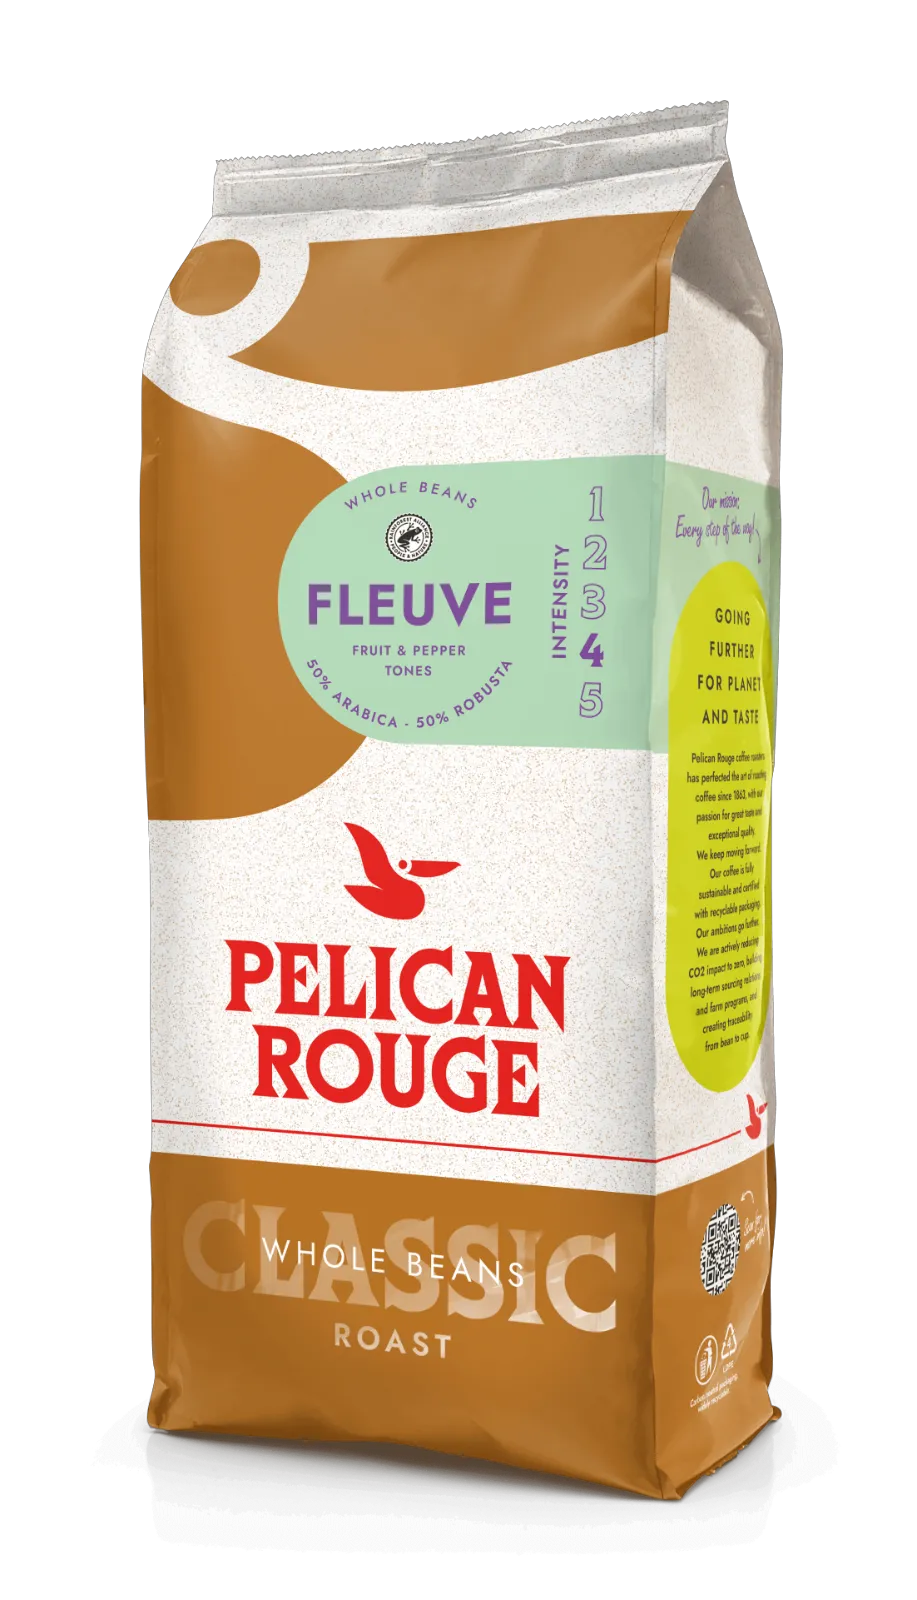 Pelican Rouge Fleuve